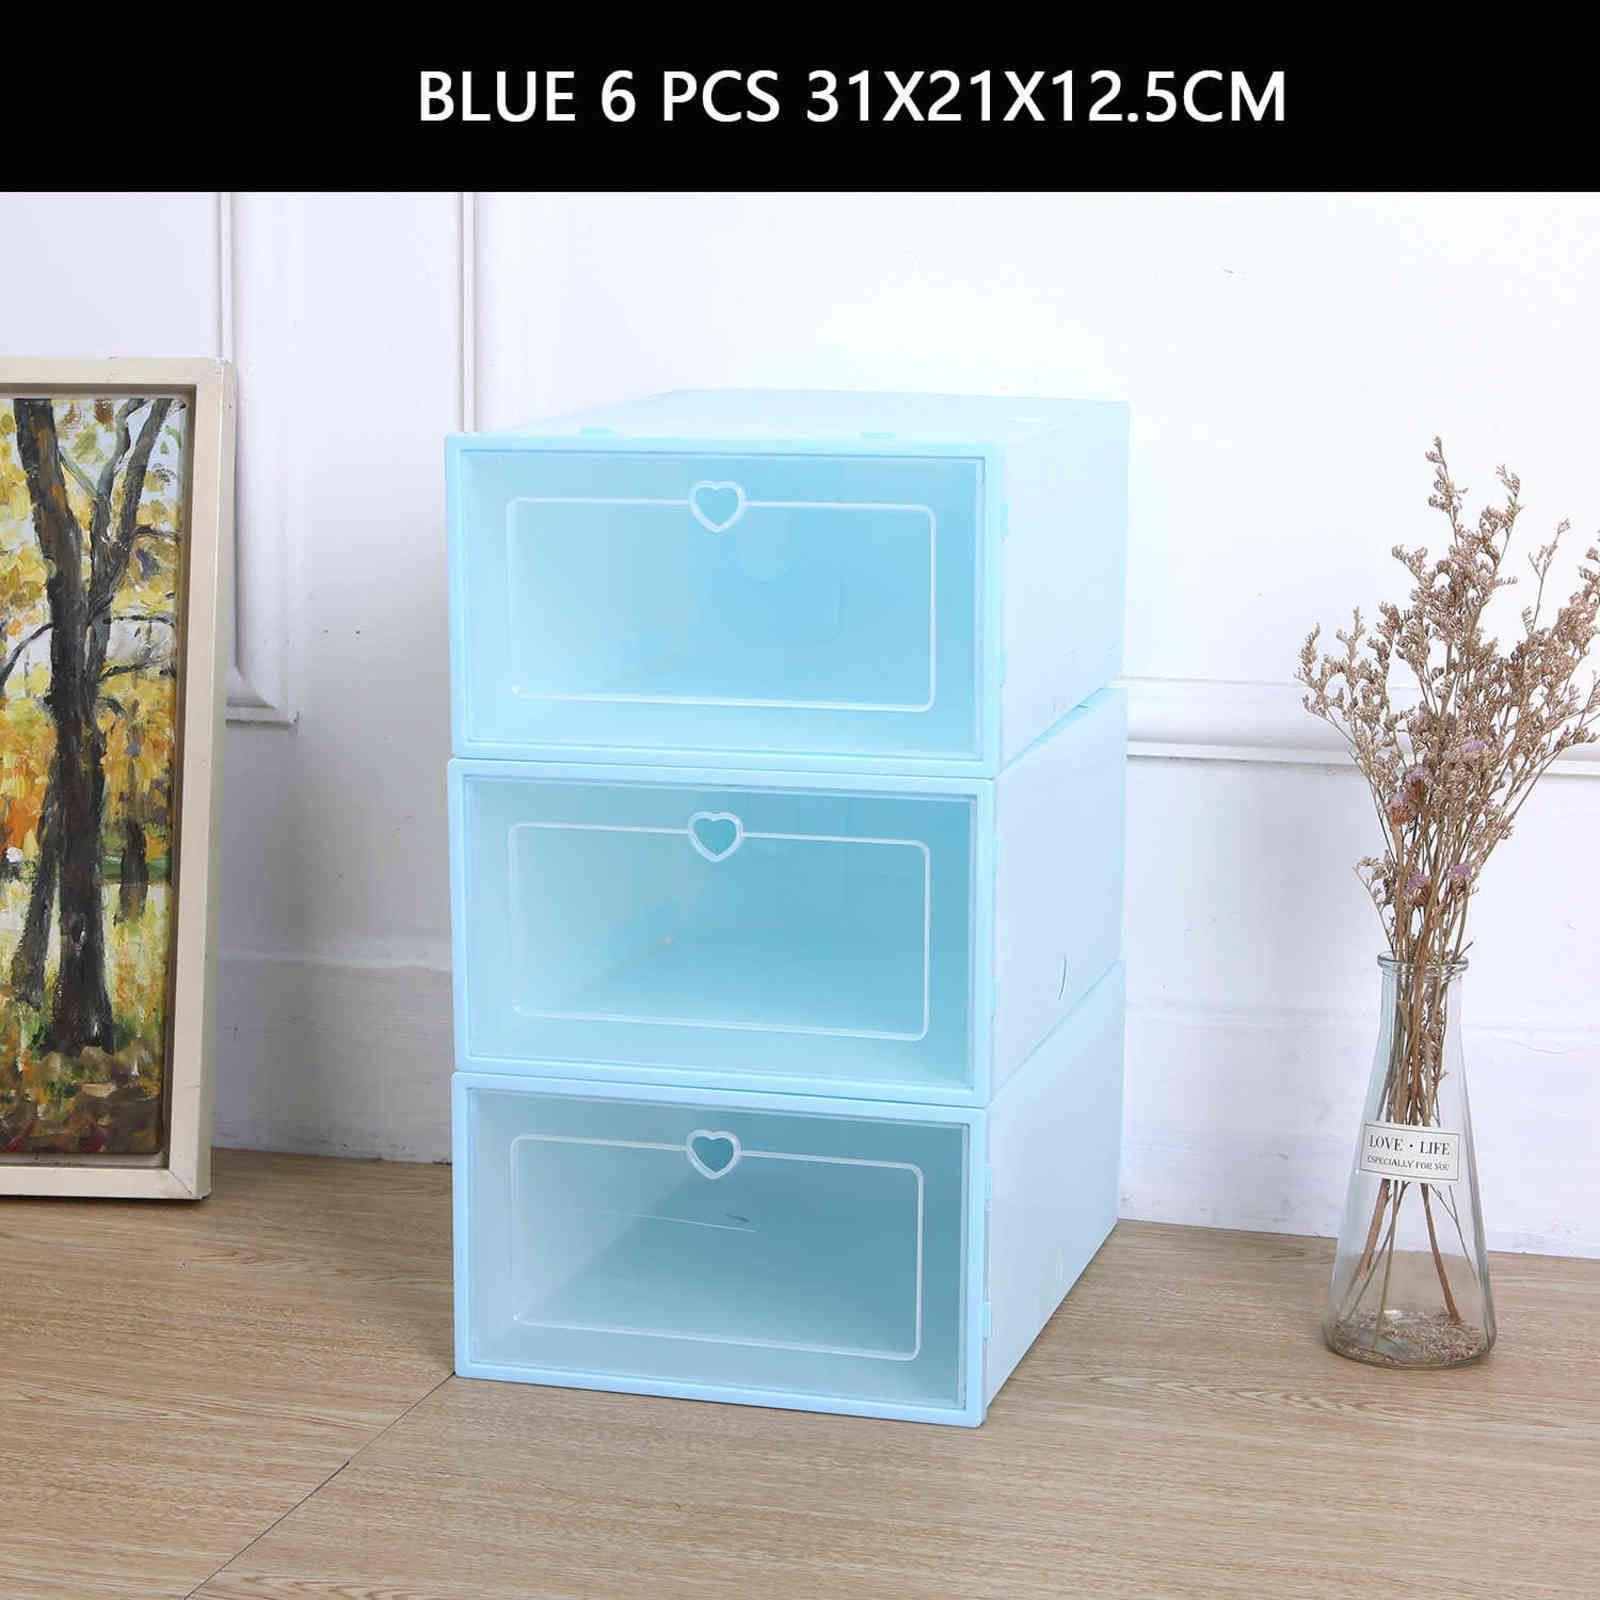 Blue 31x21x12.5cm